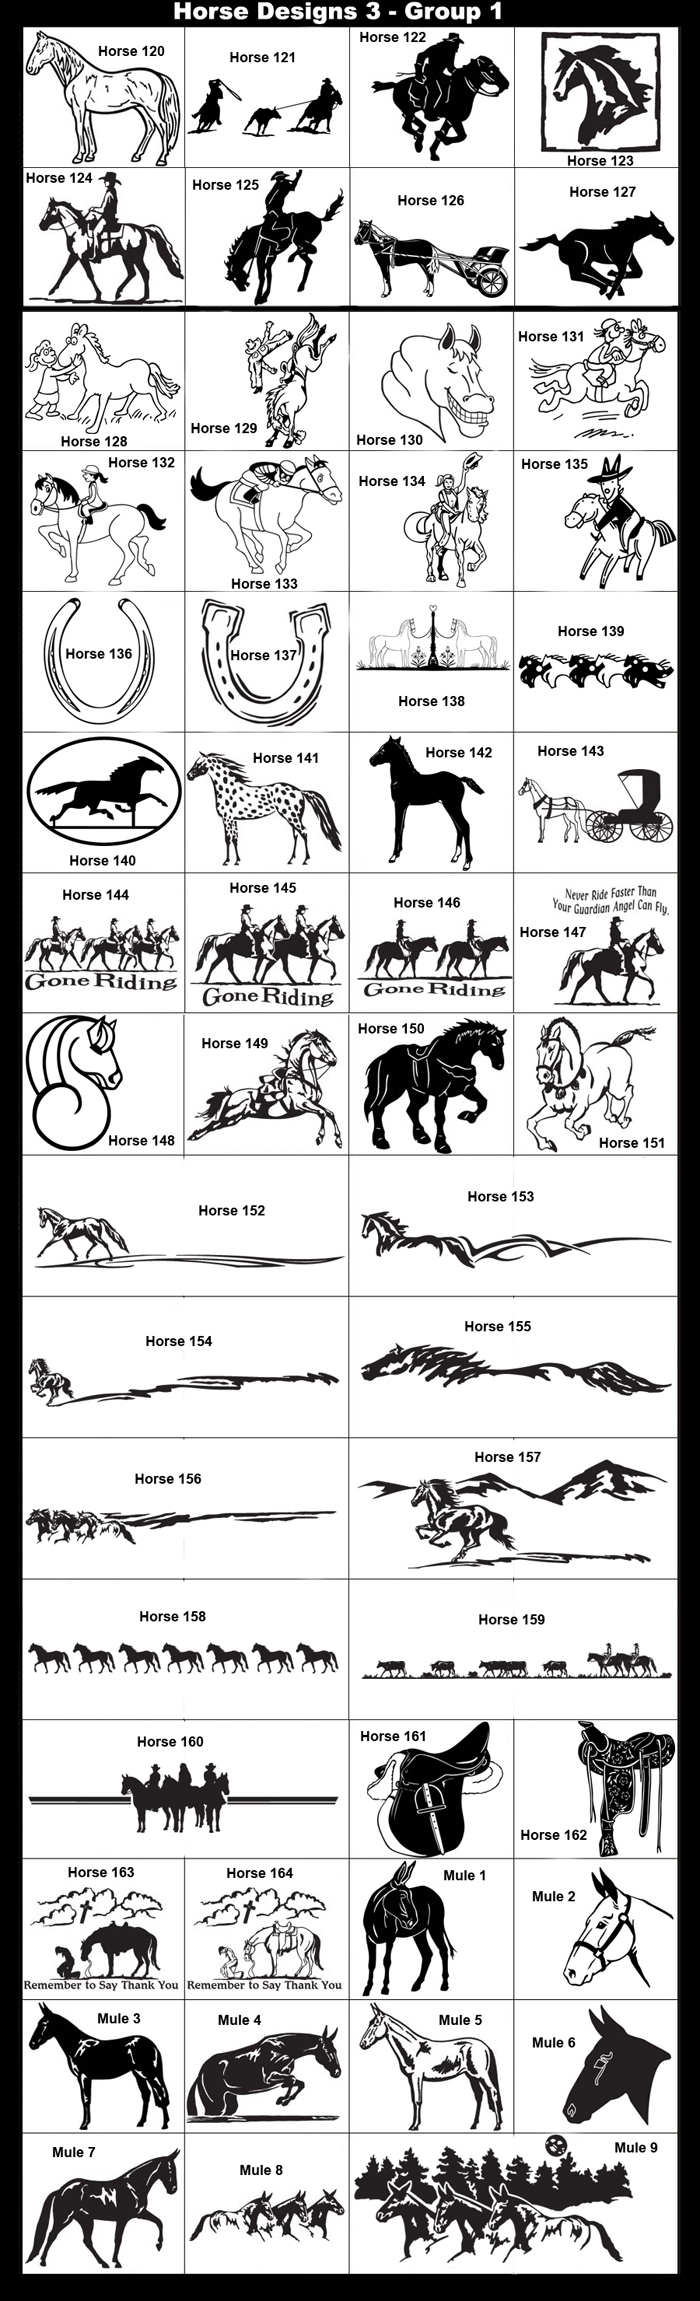 Bucking Horse, Cowboy, Cartoon Horses, Decorative Horse, Horse Head, Horseshoe, Ponies, Appaloosa, Pony, Western Riding, Gone Riding, Trotting Horse, Running Horse, Leaping Horse